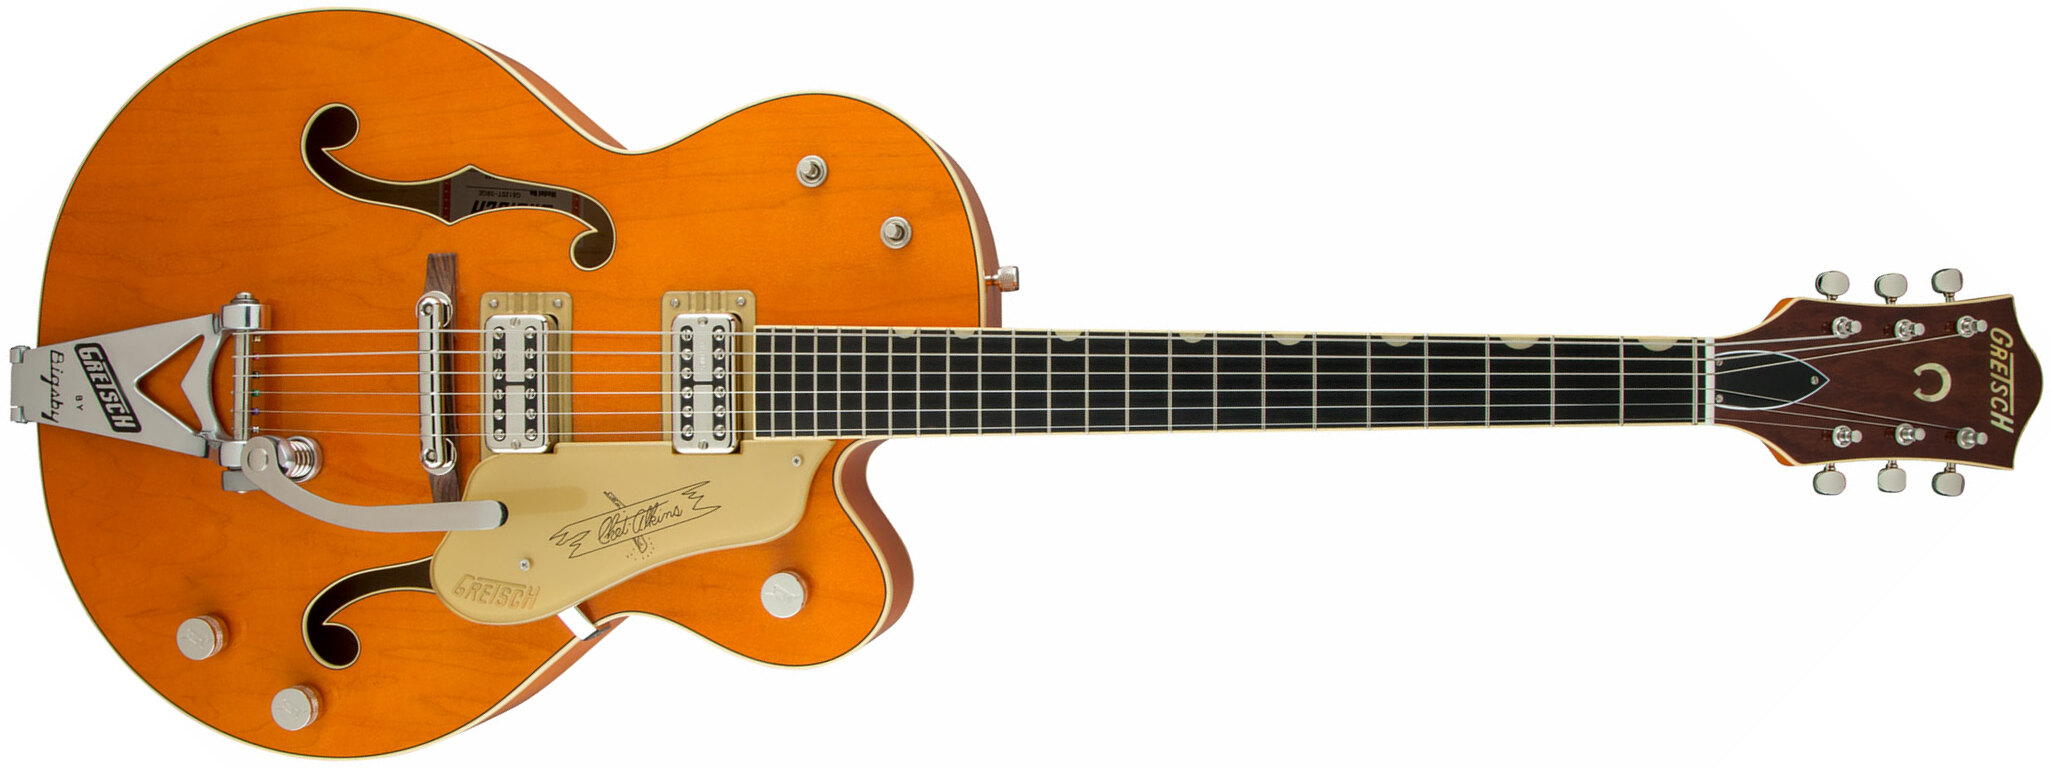 Gretsch Chet Atkins G6120t-59 Vintage Select 1959 Bigsby Pro Jap 2h Tv Jones Trem Eb - Vintage Orange Stain - Hollowbody E-Gitarre - Main picture